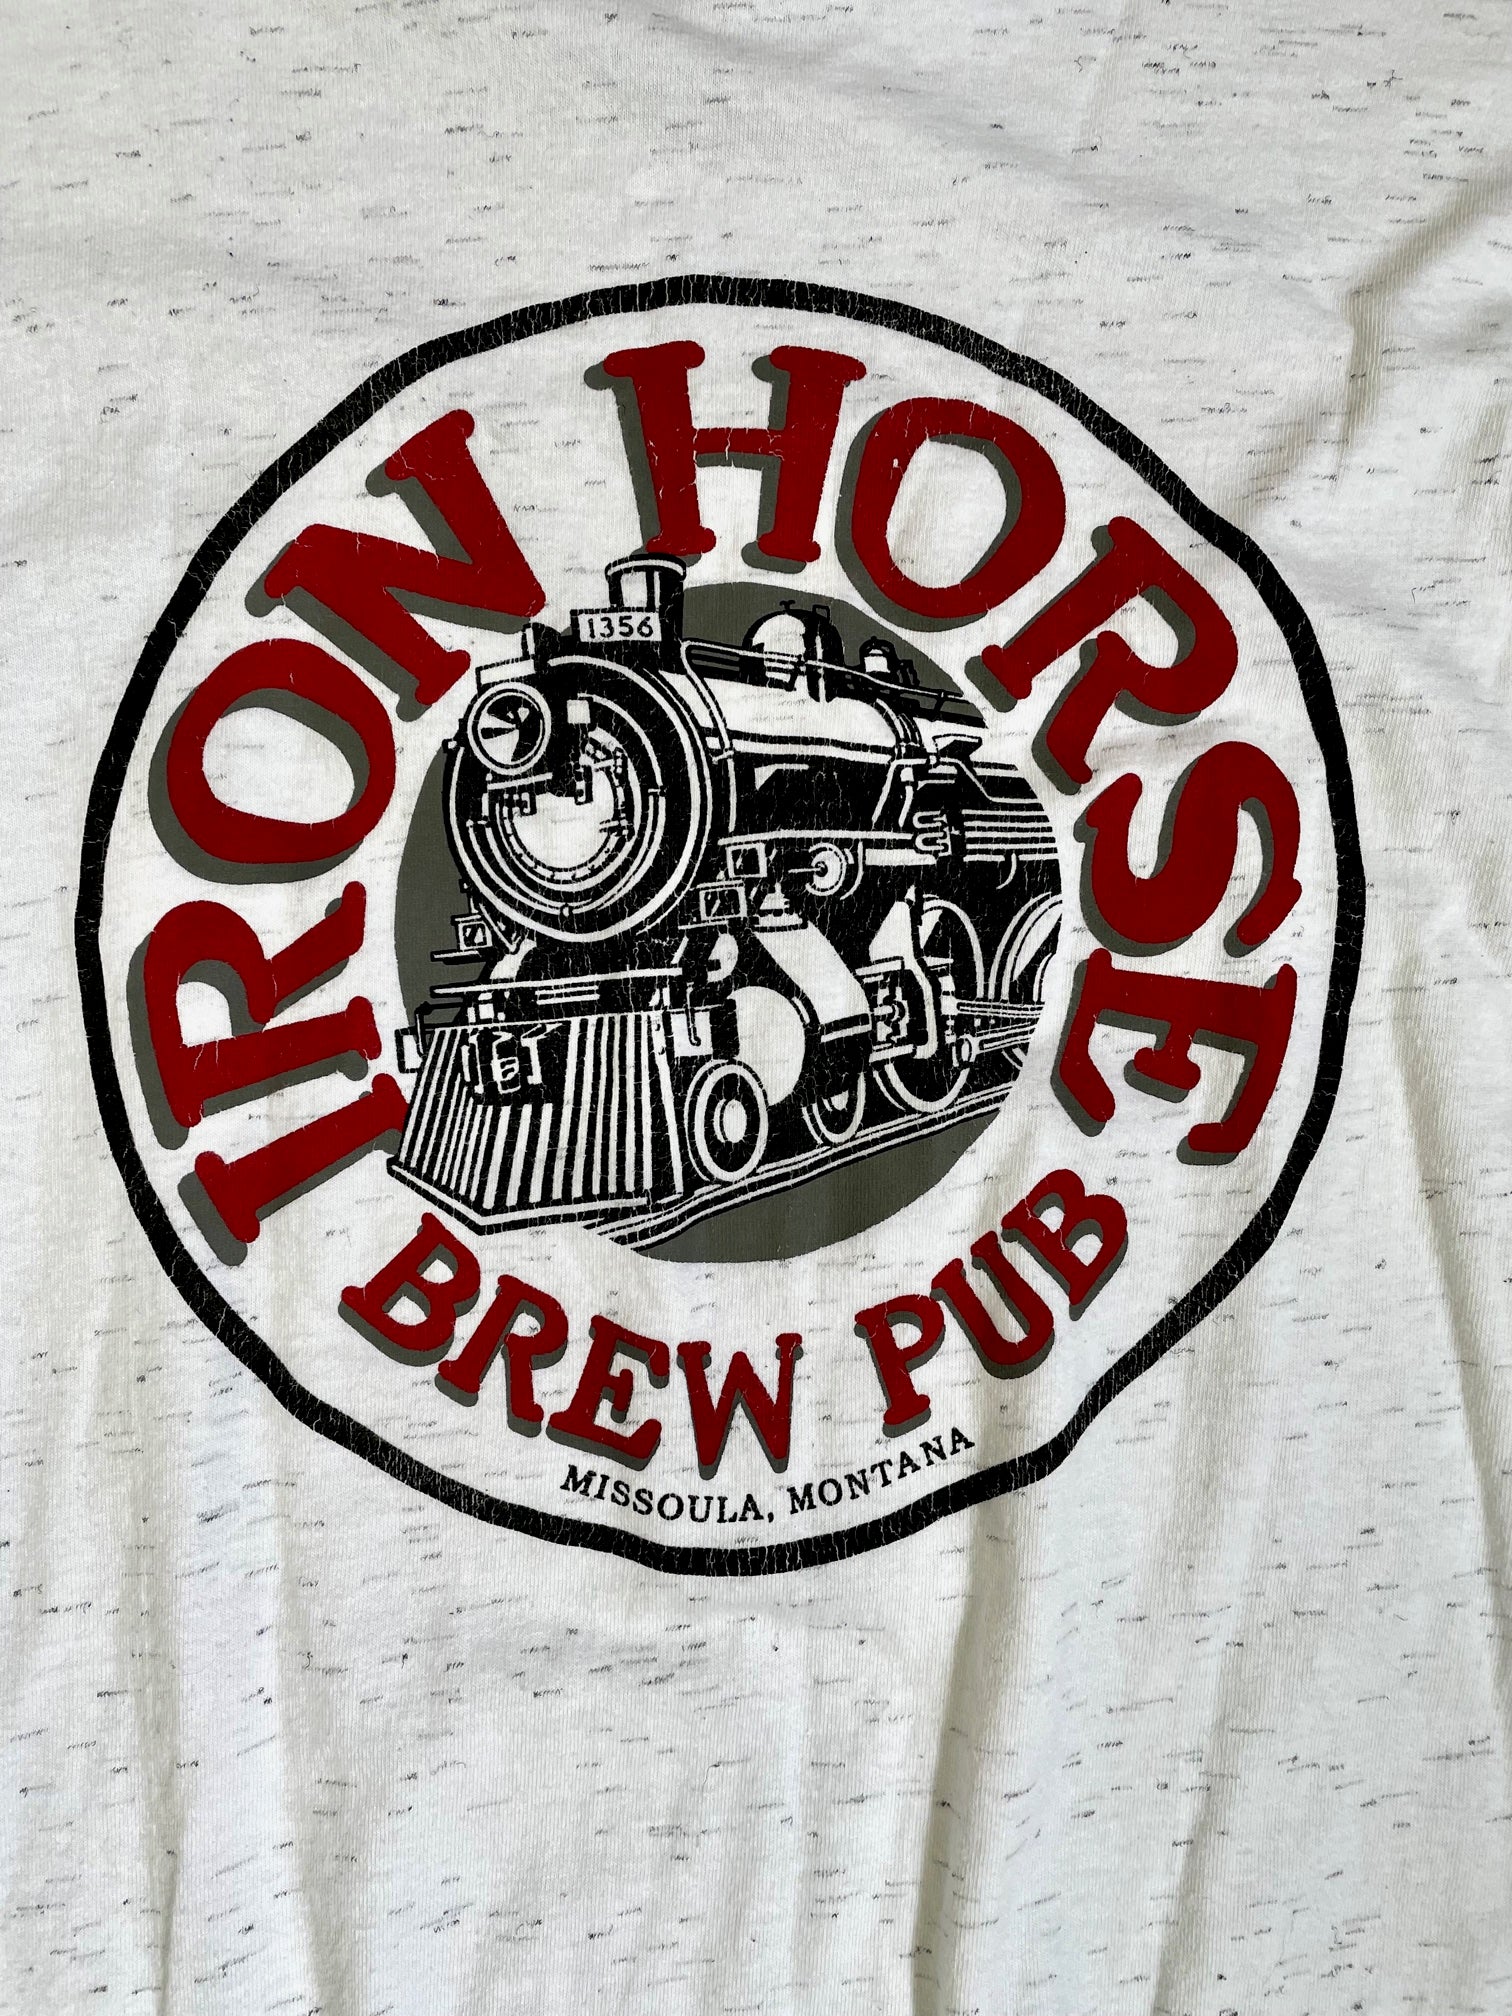 Vintage "Iron Horse Brew Pub" Long Sleeve Graphic Tee